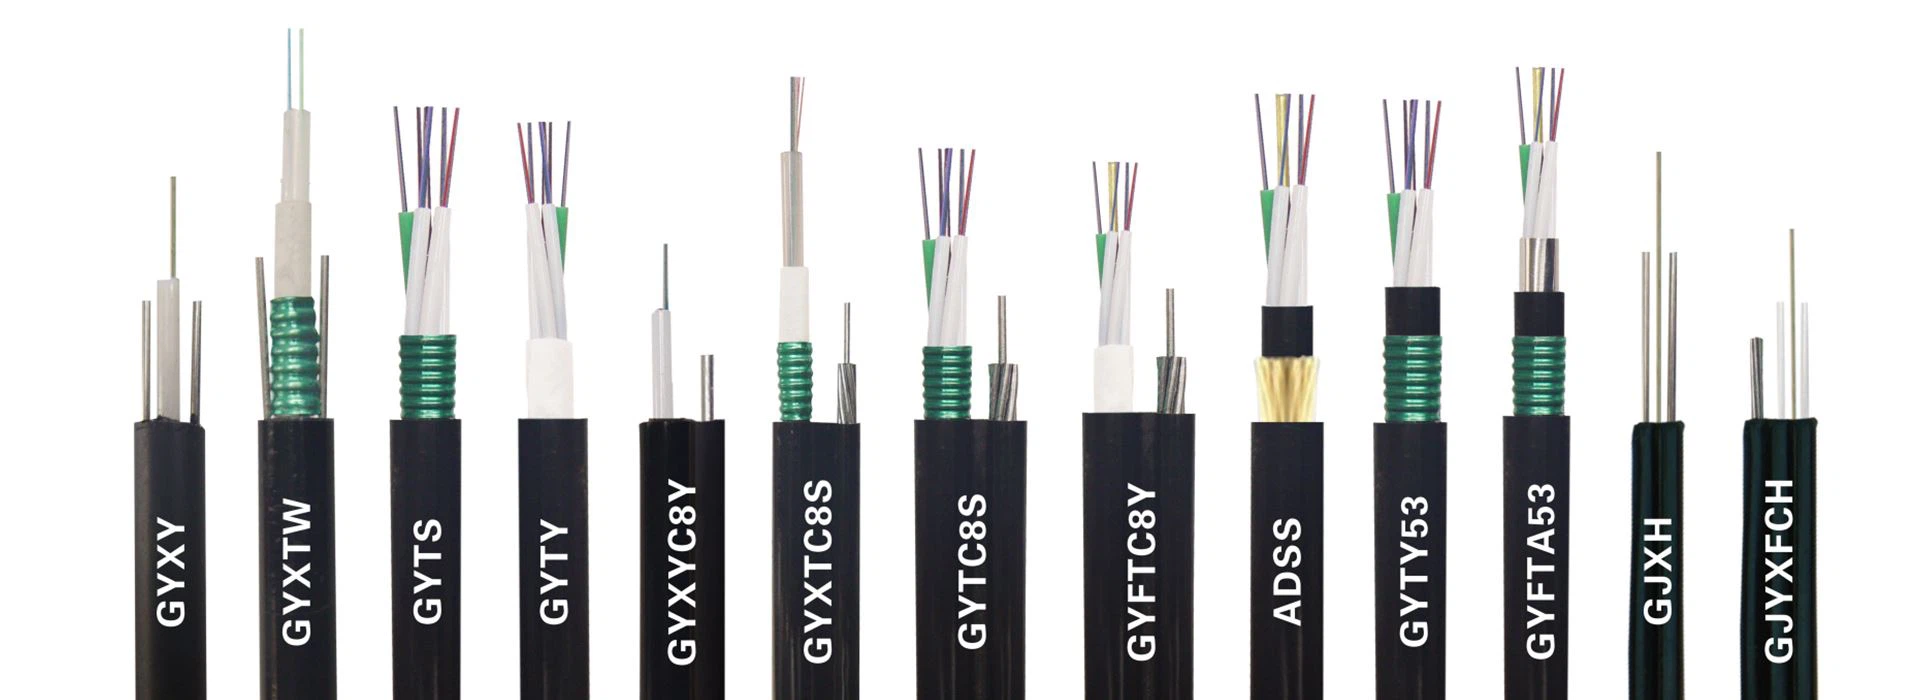 GYFY Outdoor Single-jacket Multi-tube Fiber Optic Cable